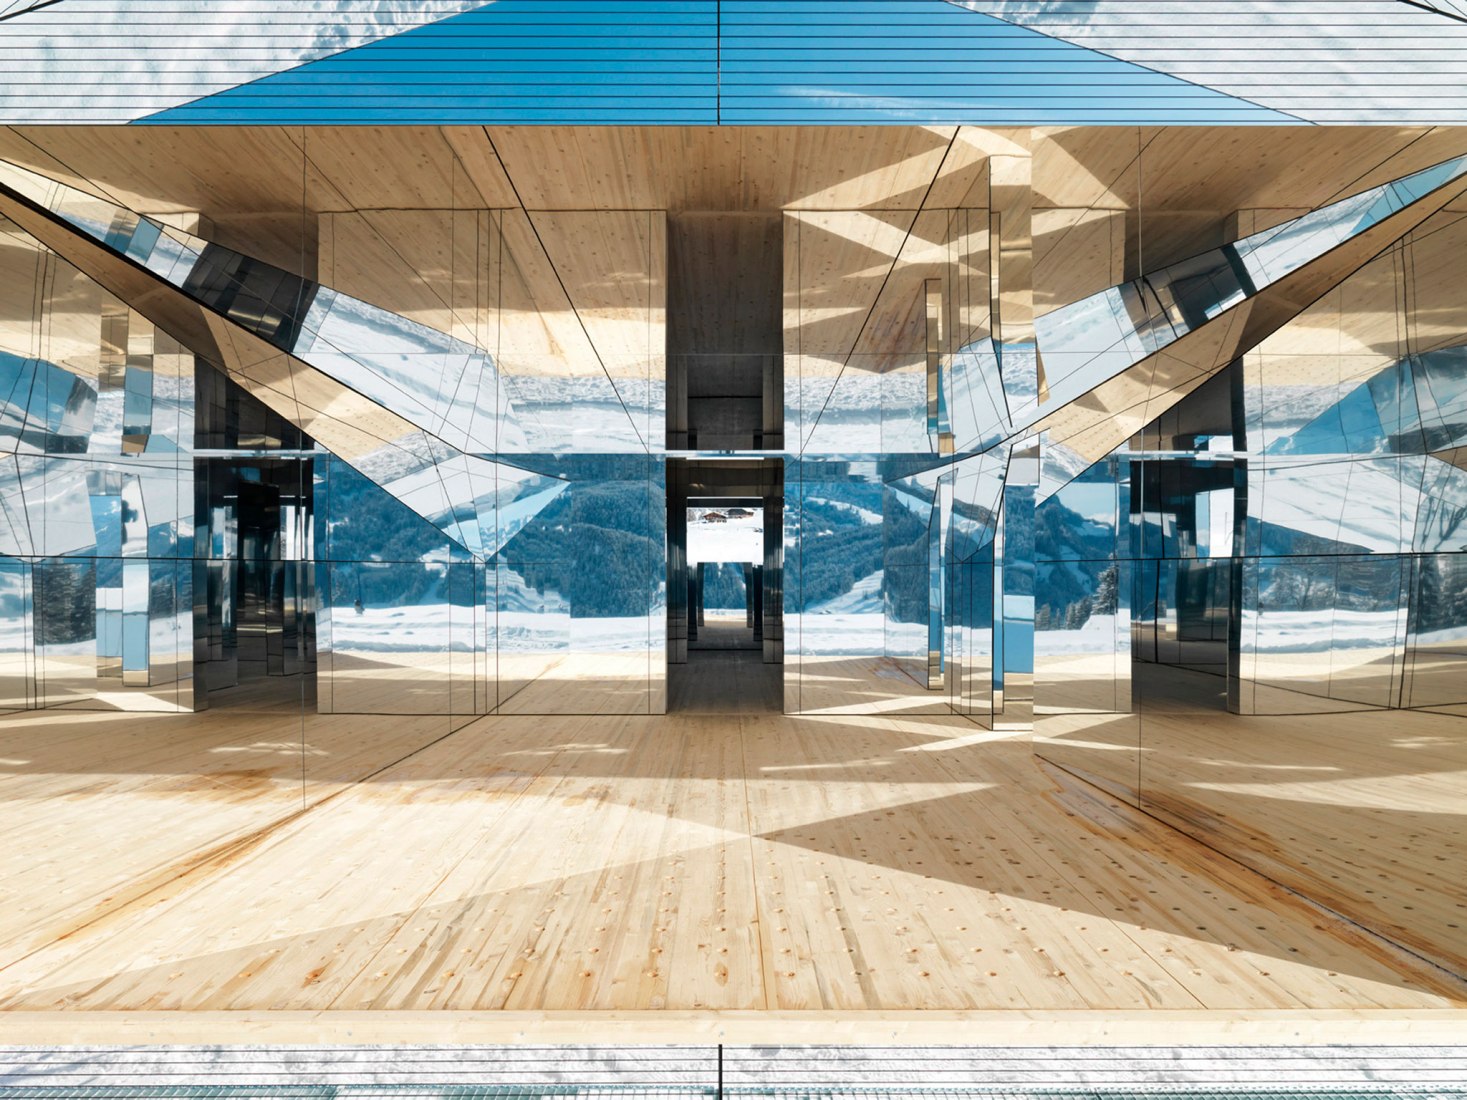 Casa Mirage instalada en los Alpes suizos por Doug Aitken. Fotografía por Stefan Altenburger, cortesía de Doug Aitken